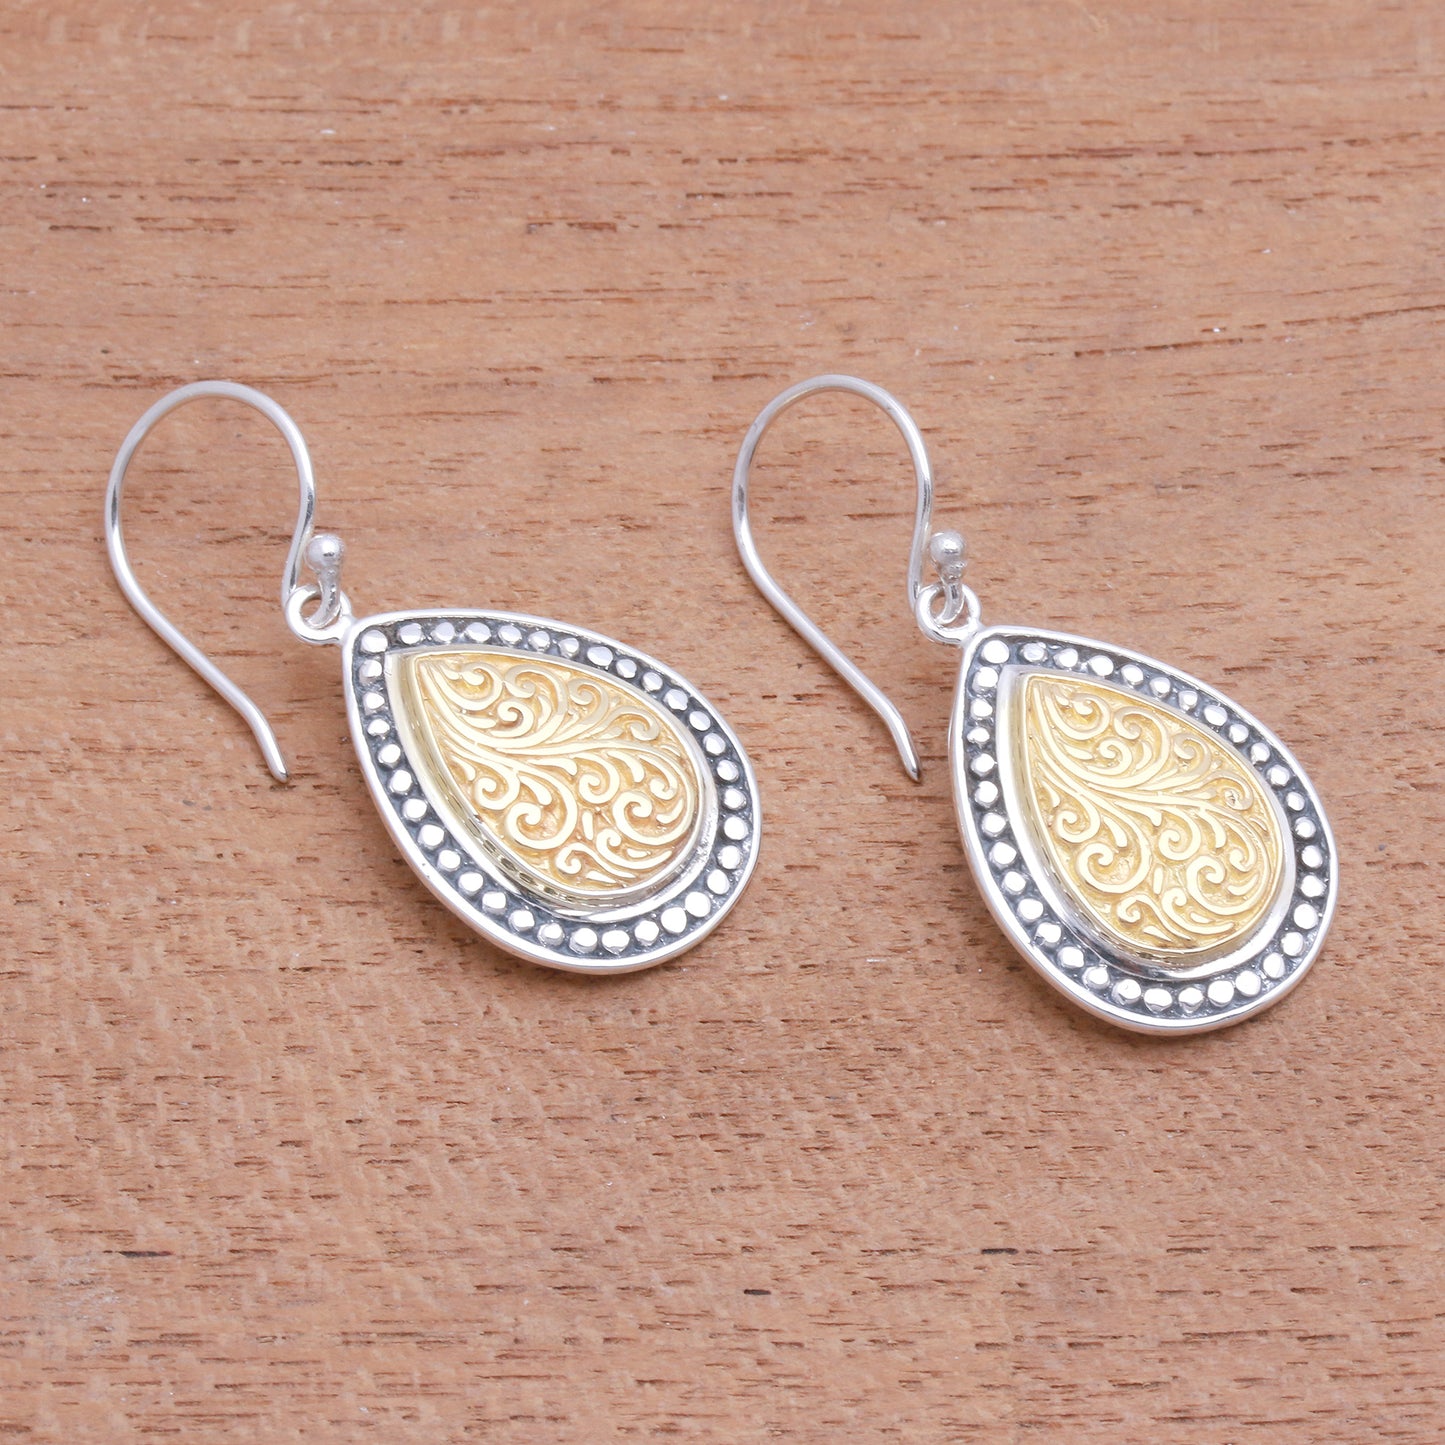 Droplet Frames Swirl Pattern Gold Accented Sterling Silver Dangle Earrings